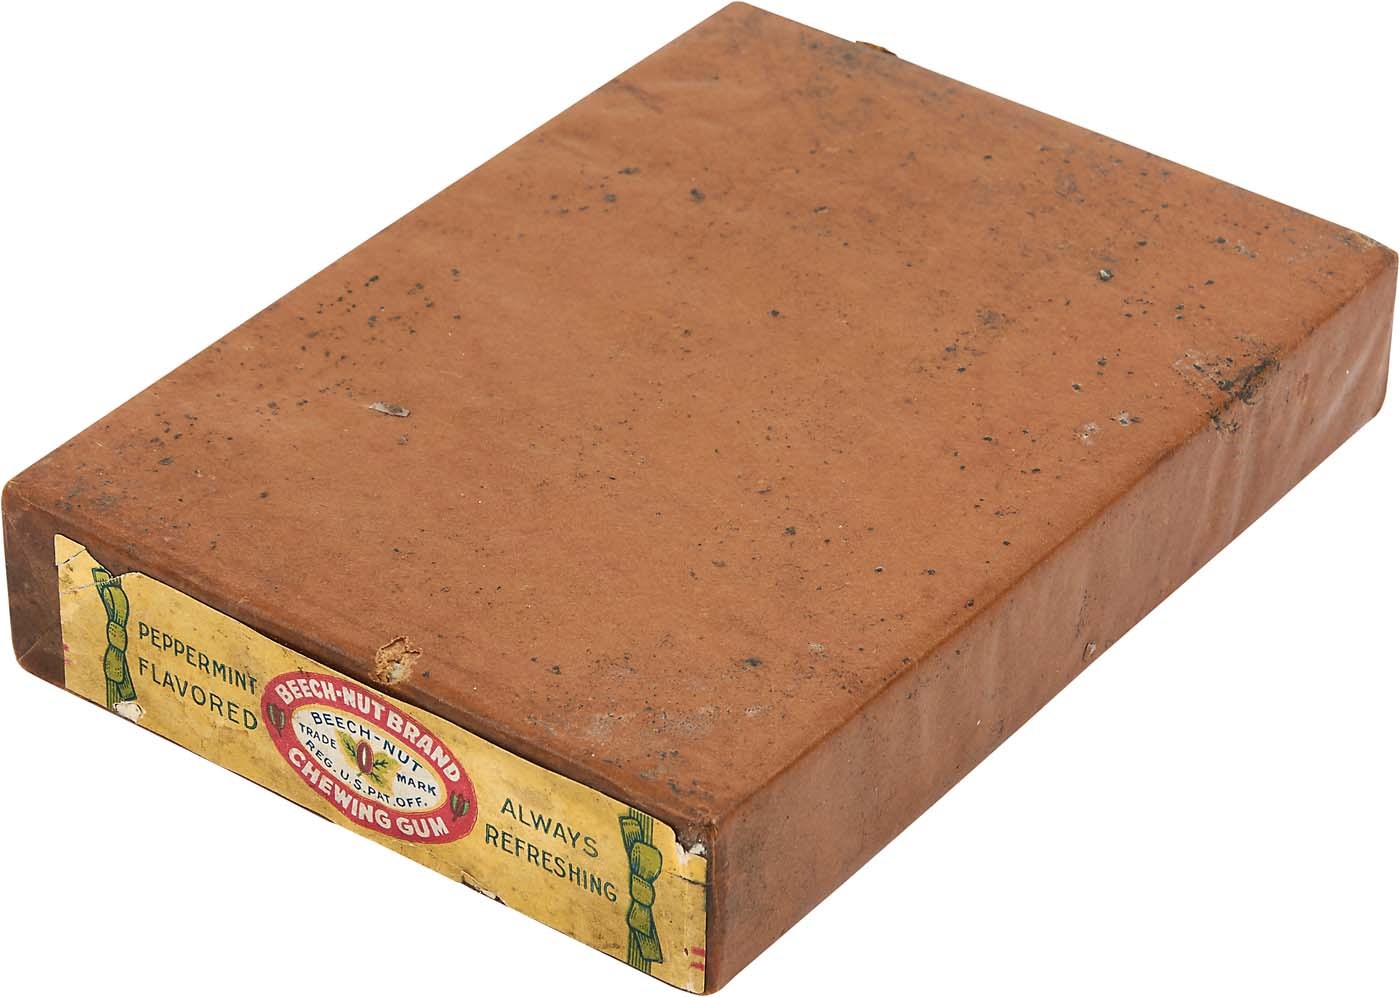 - 1930s Beechnut Gum Box SEALED with Individual Packs